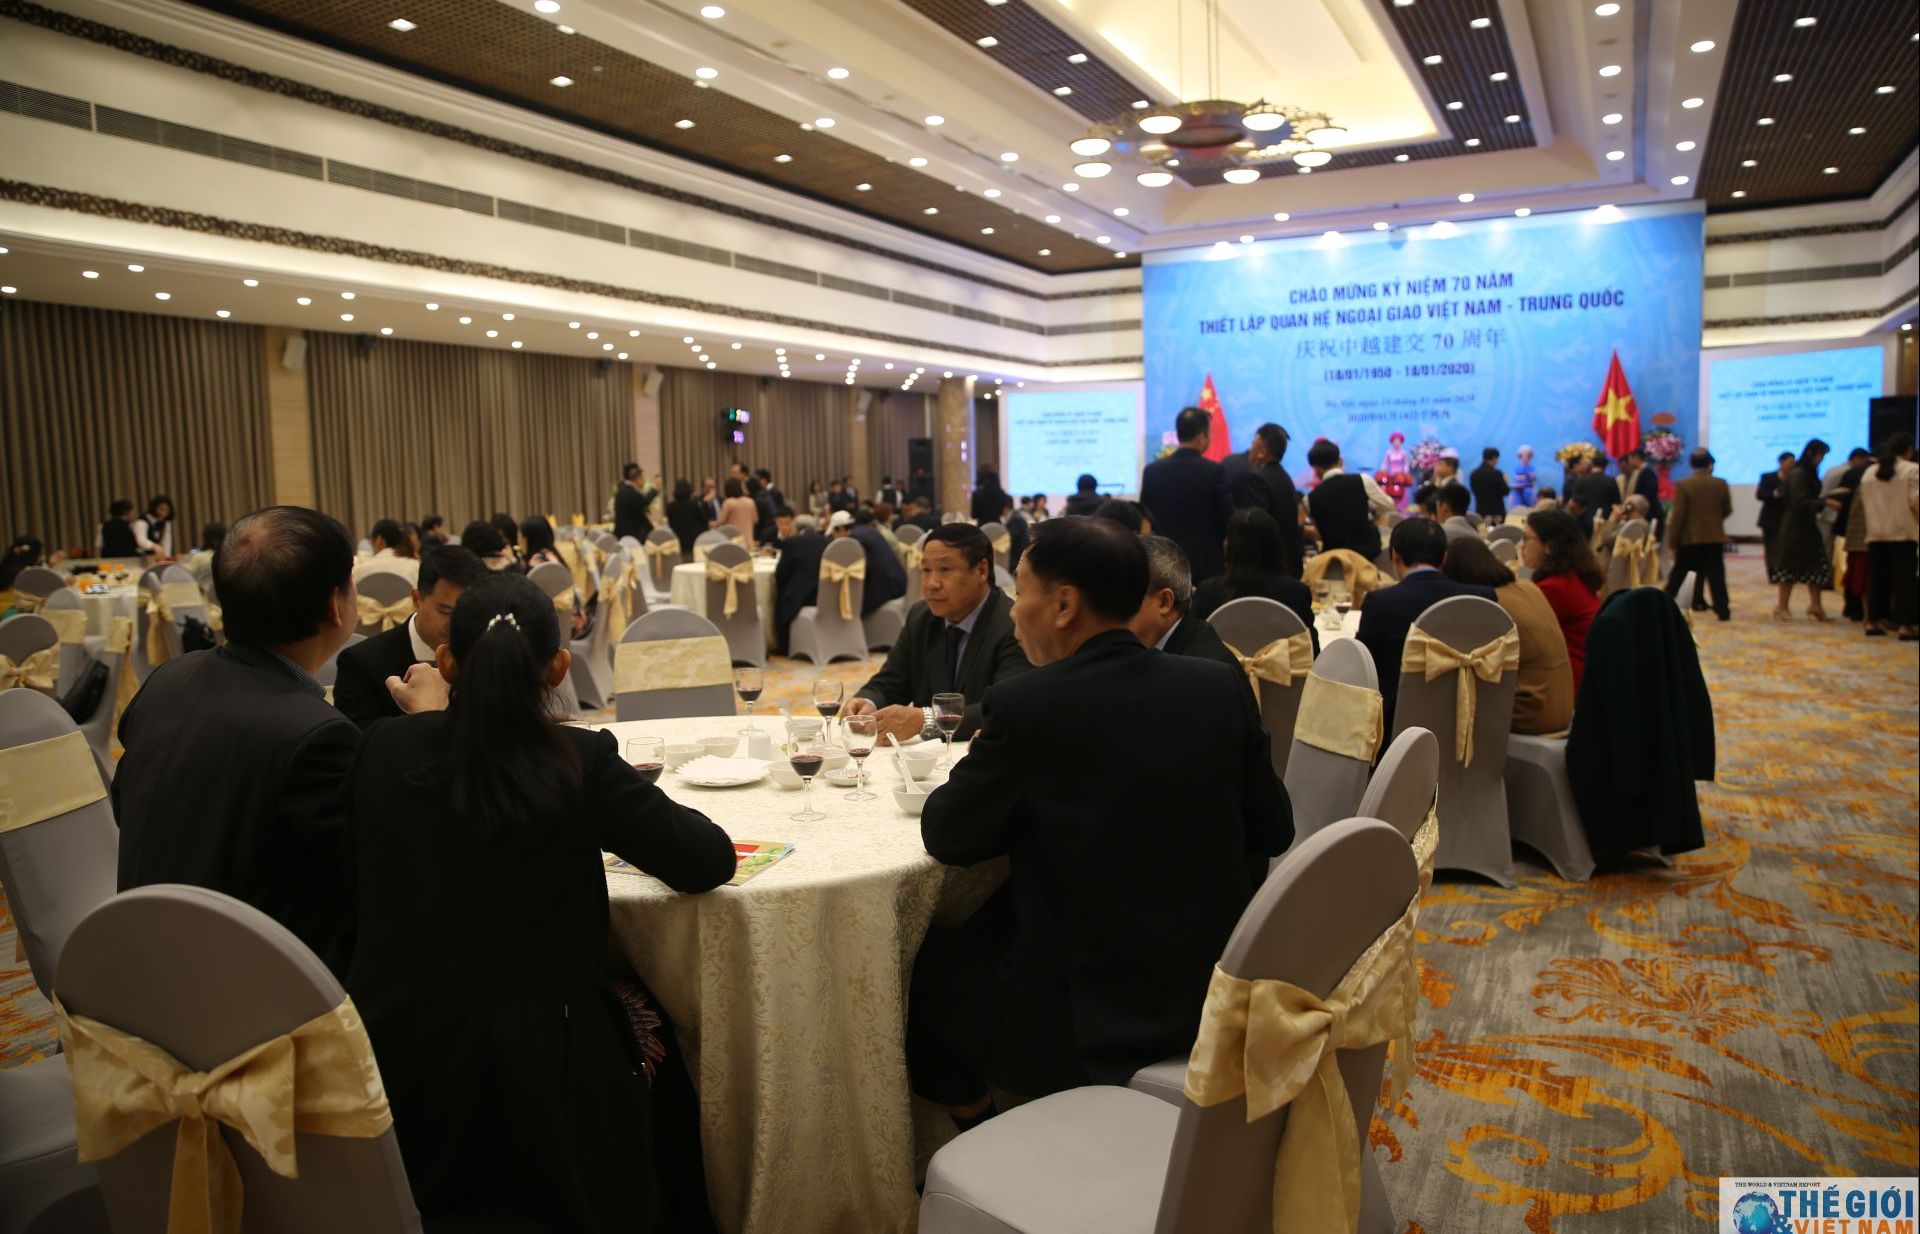 Reception marks 70th anniversary of Vietnam-China diplomatic ties